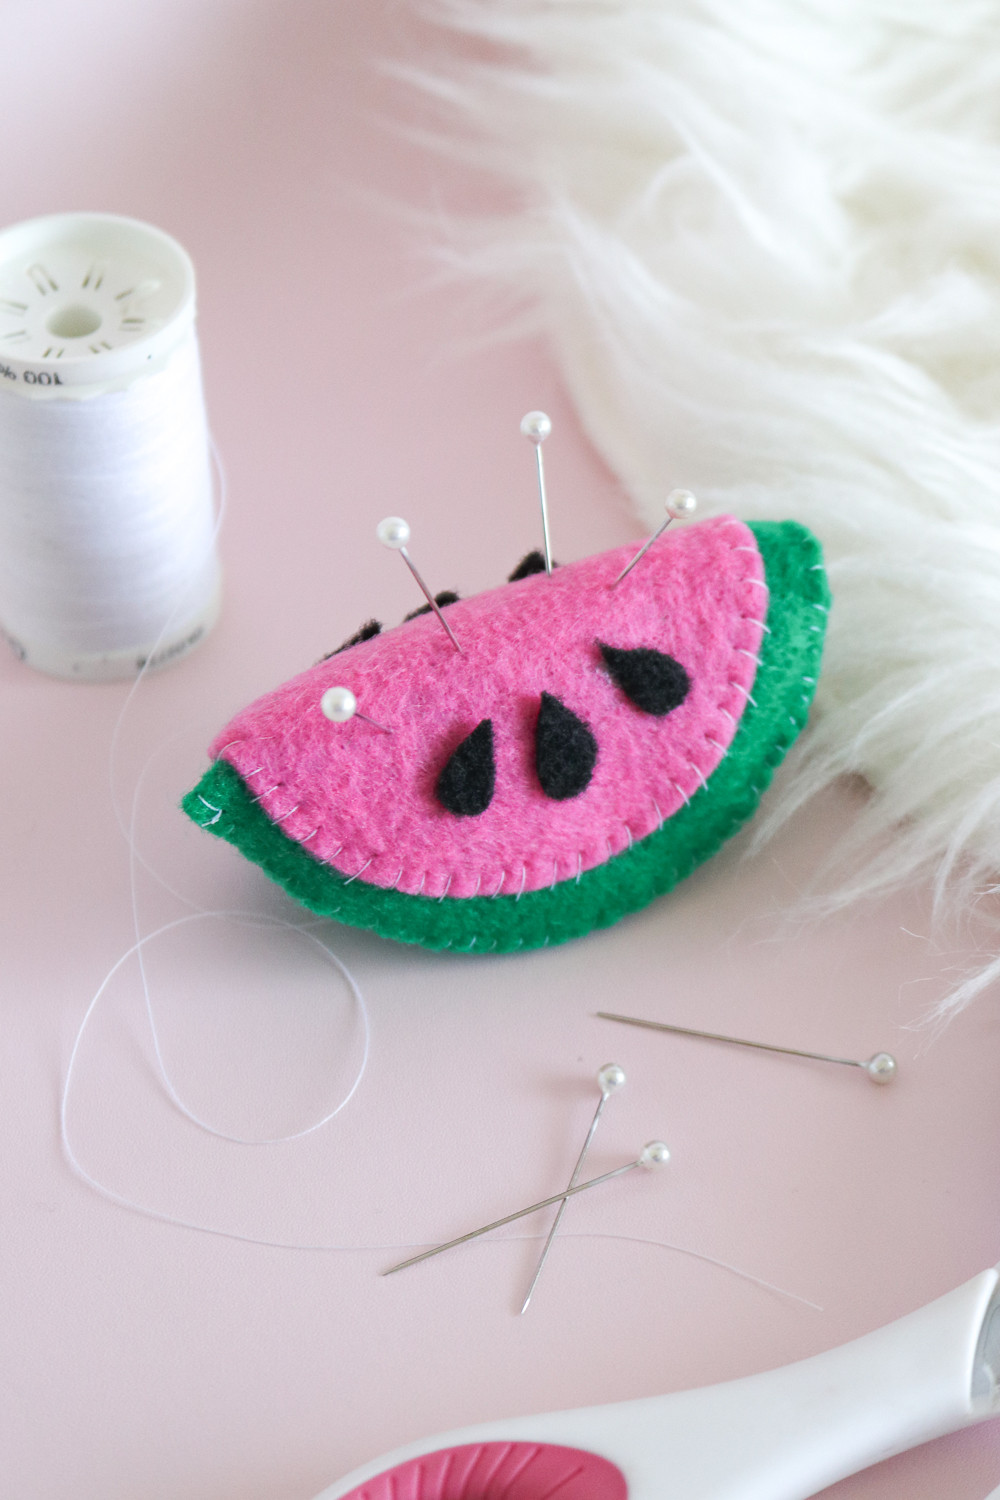 Best ideas about DIY Pin Cushion
. Save or Pin DIY Watermelon Pin Cushion Now.